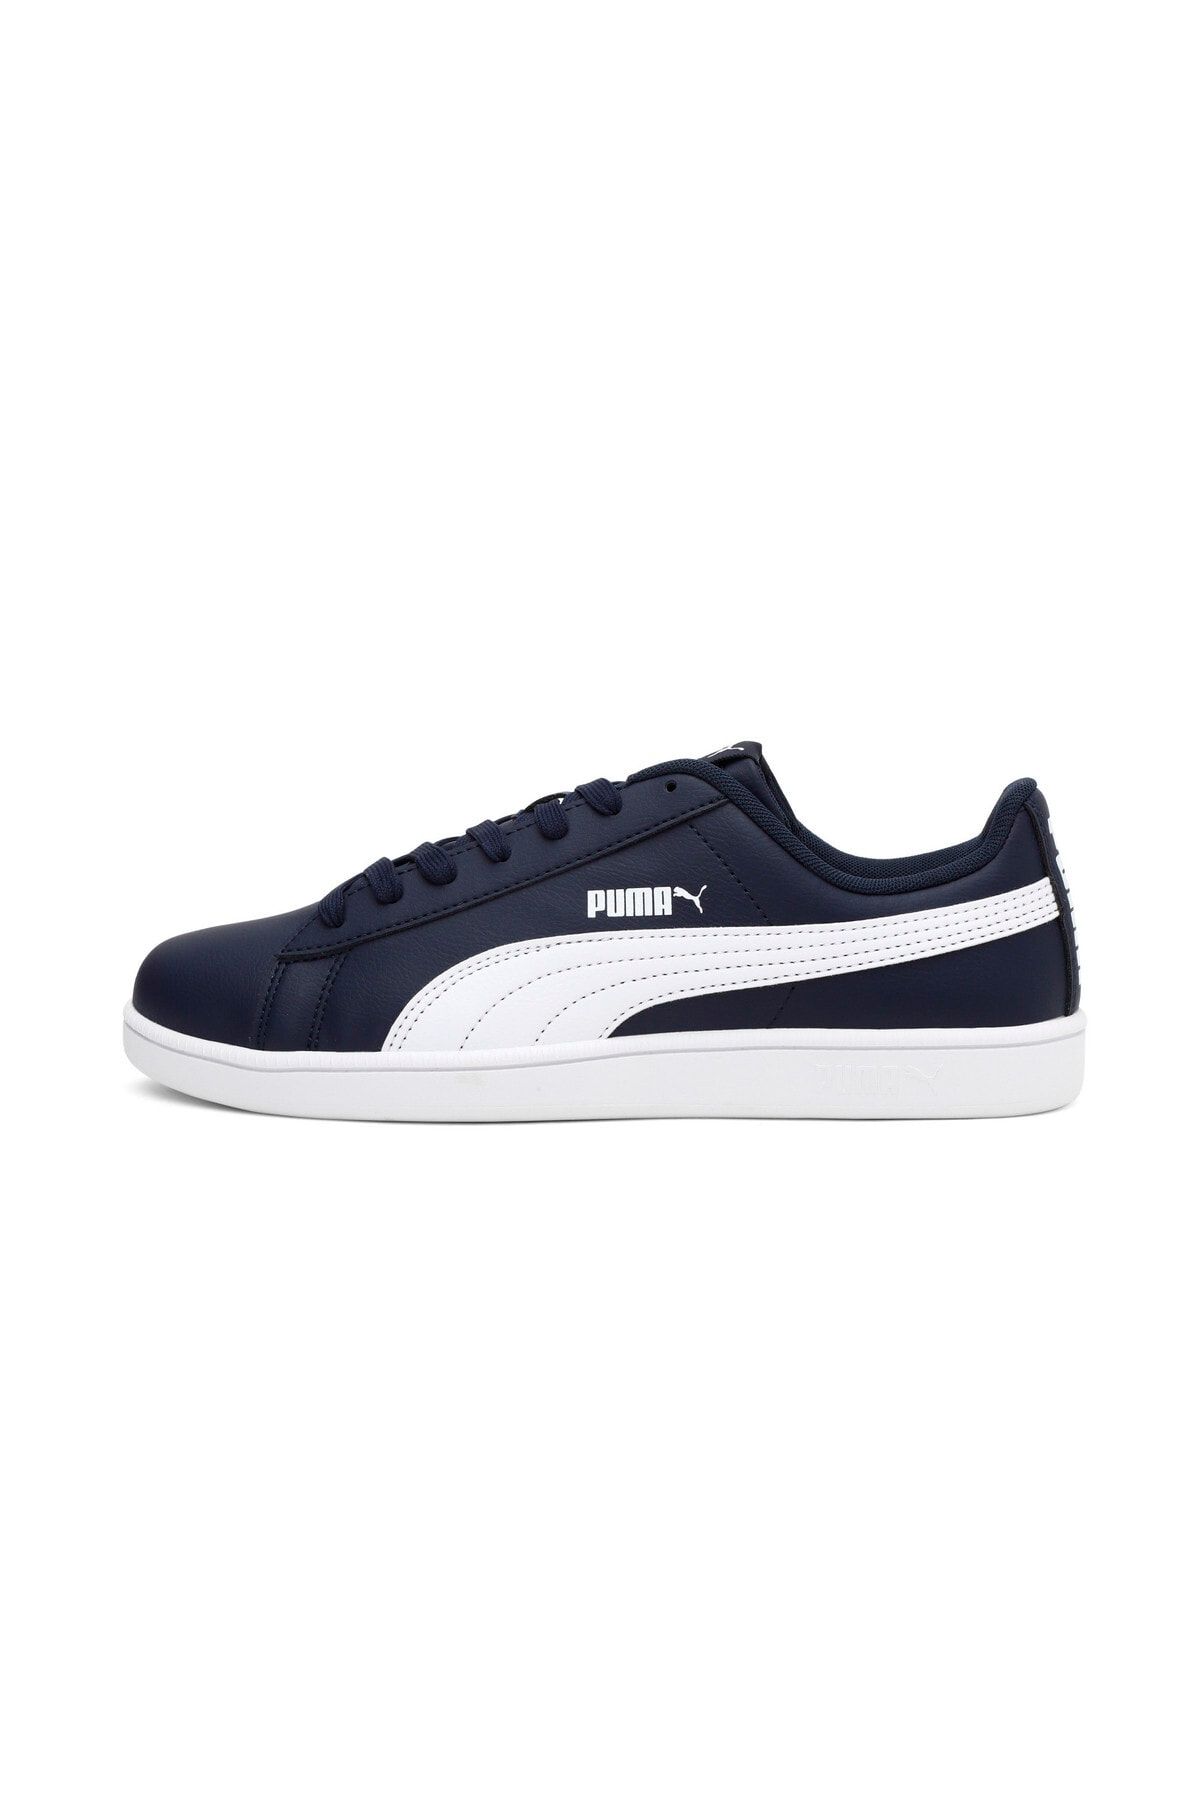 Puma Unisex Sneaker - UP TDP - 38278603